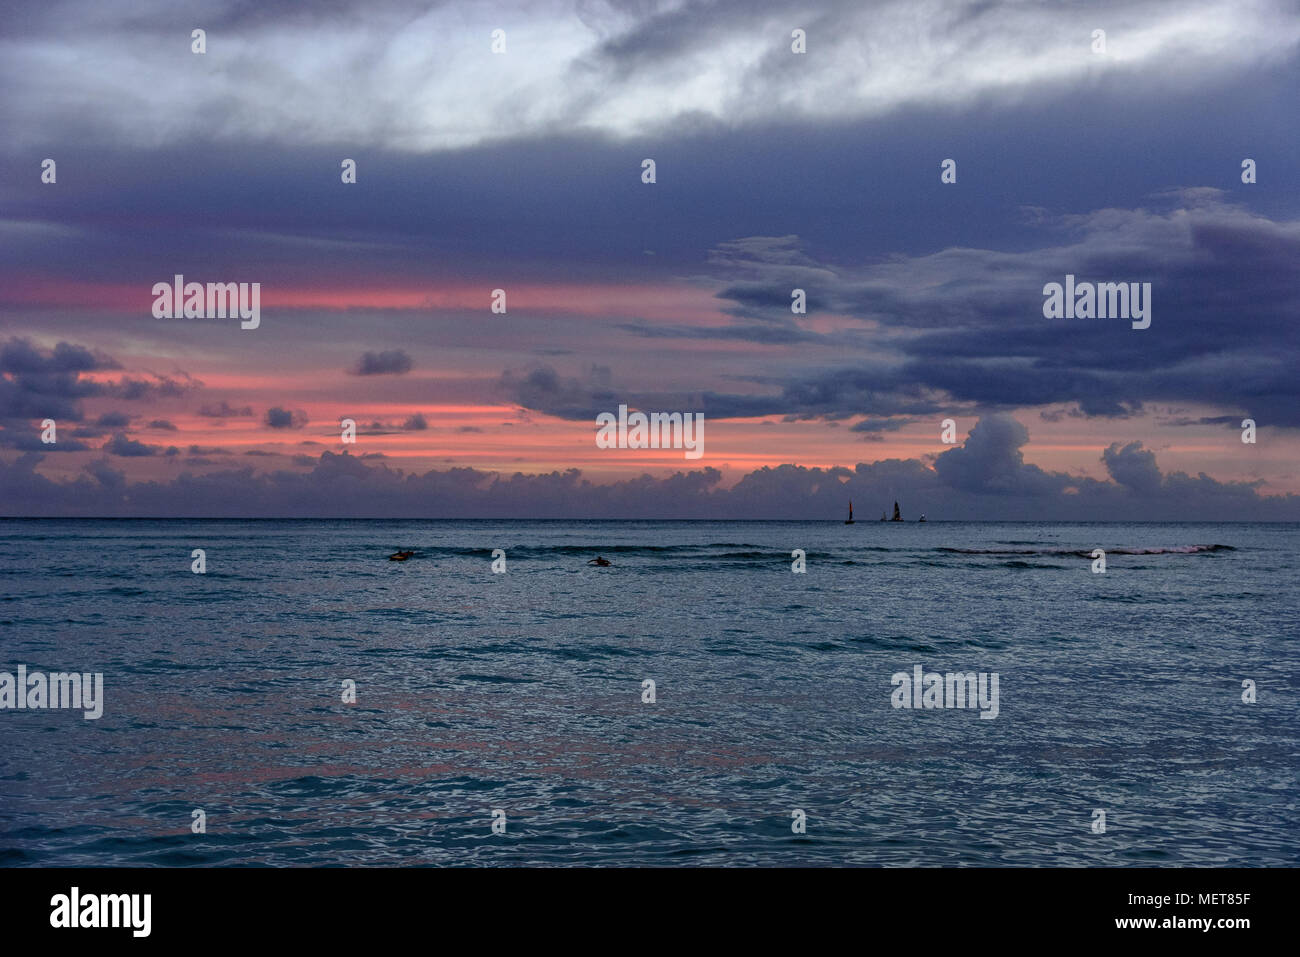 Sailboats on the far horizon at twilight seen from Waikiki Beach, Hawaii Stock Photo